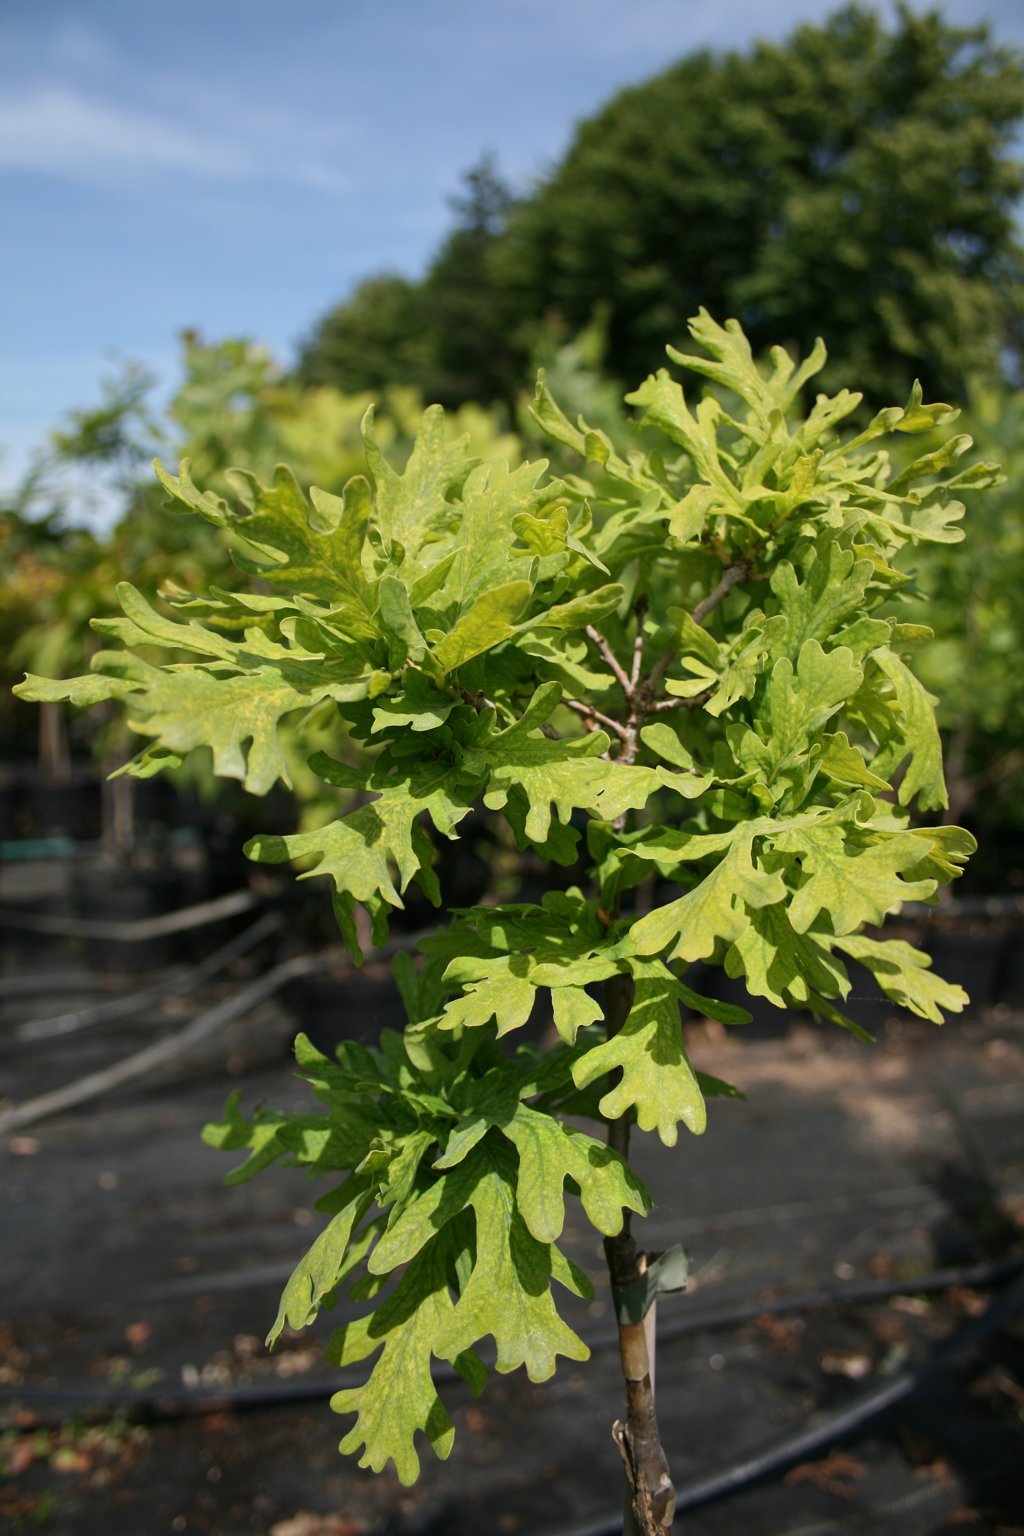 Dąb szypułkowy "Strypemonde" / Quercus robur "Strypemonde"